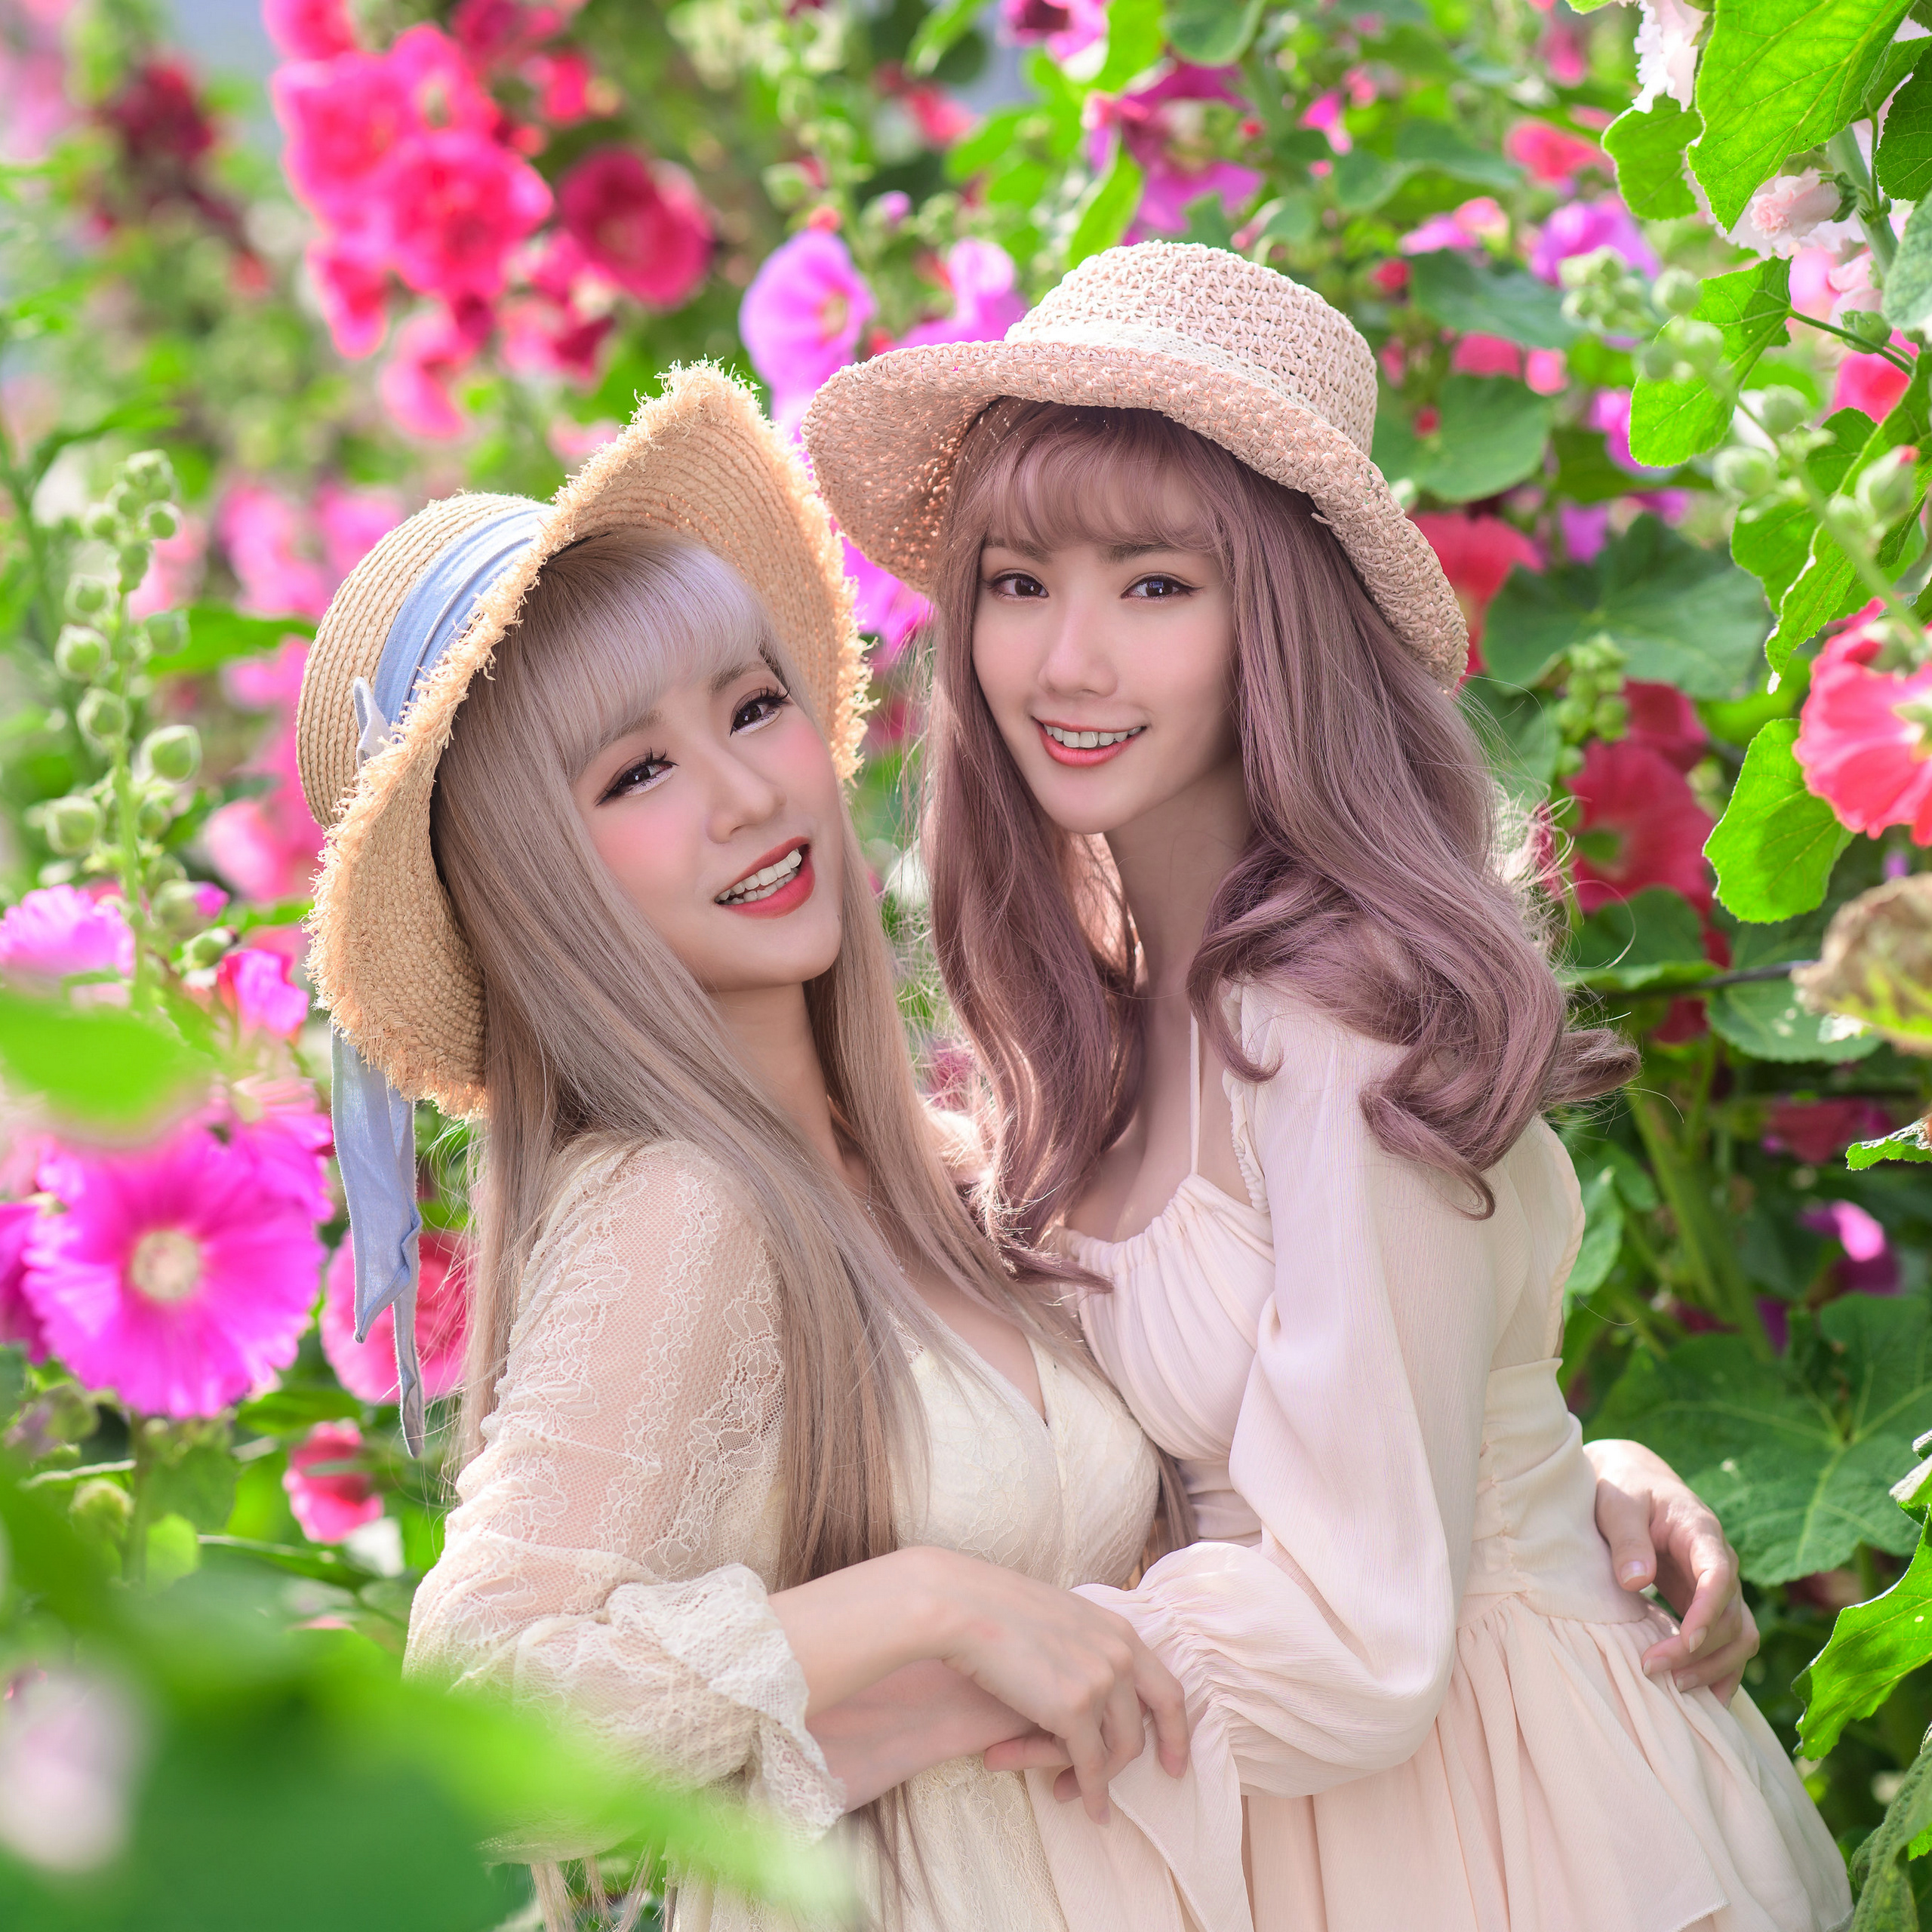 Asian Model Women Long Hair Dyed Hair Straw Hat Two Women Women Outdoors Flowers Dress Hugging Looki 2560x2560